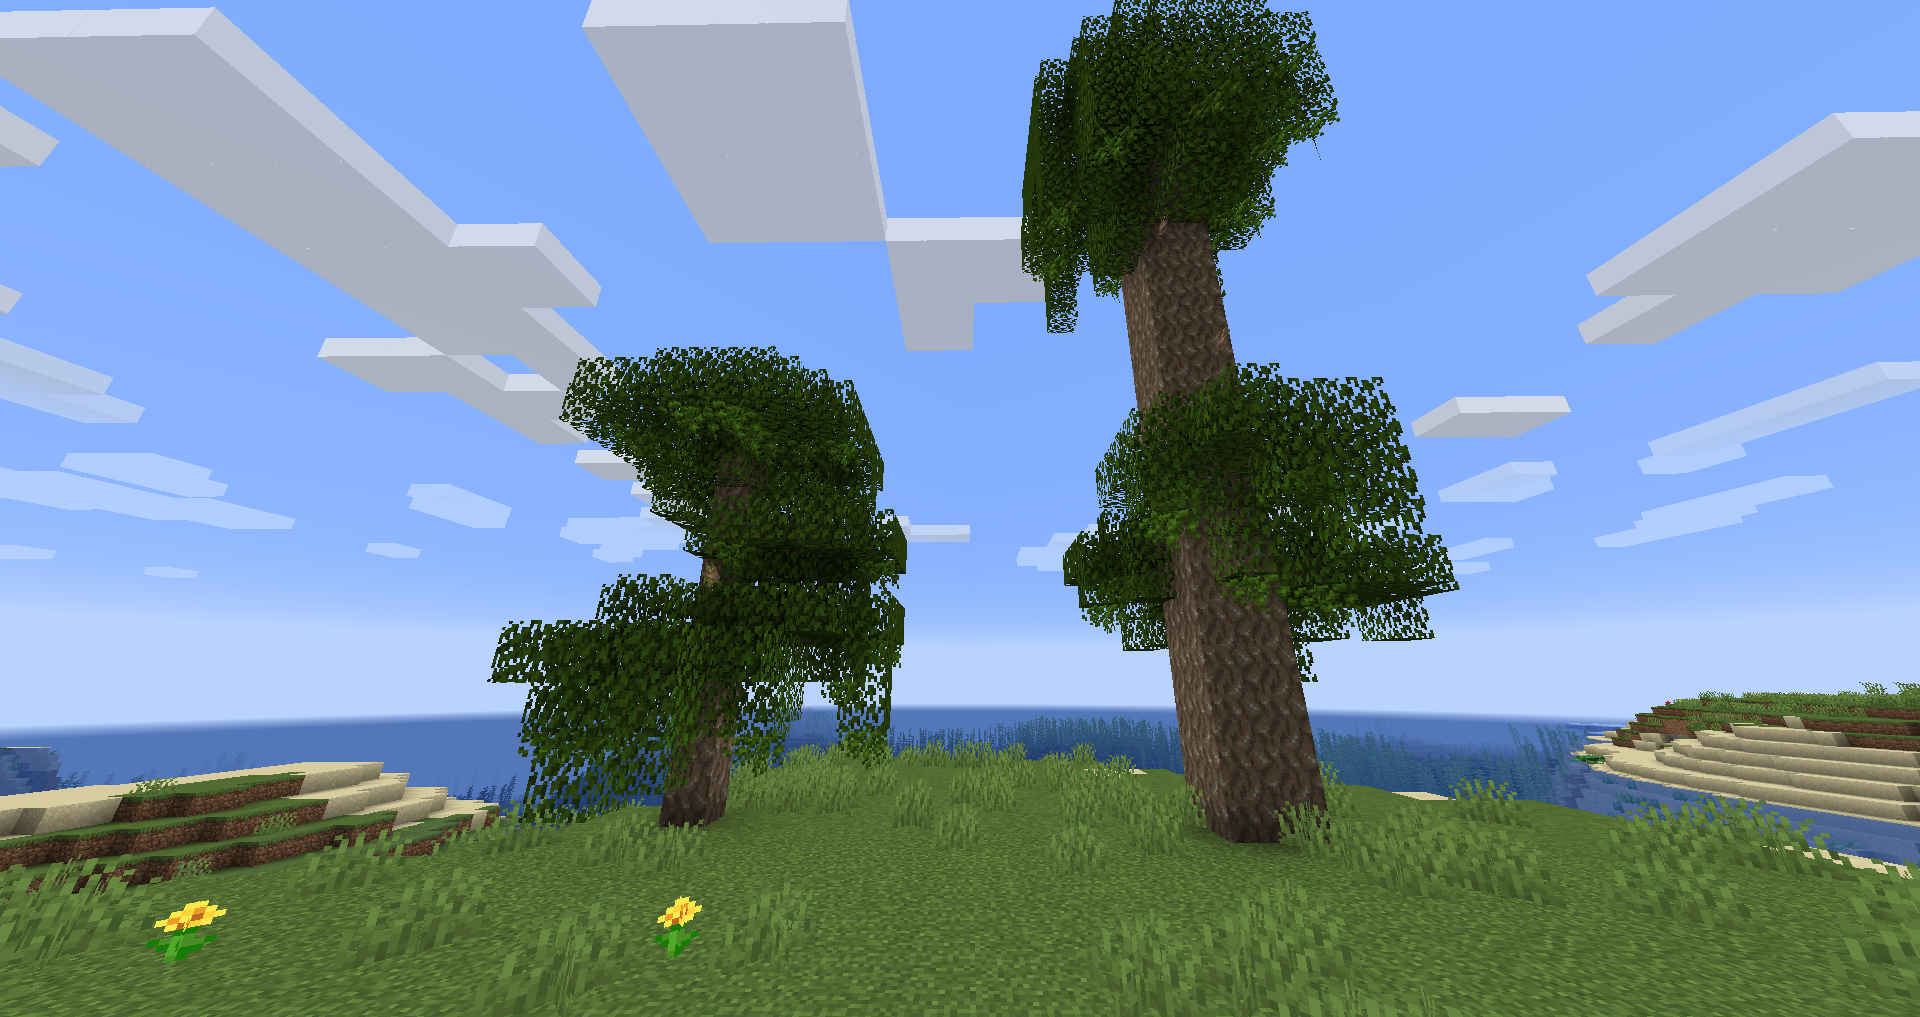 Cypress trees